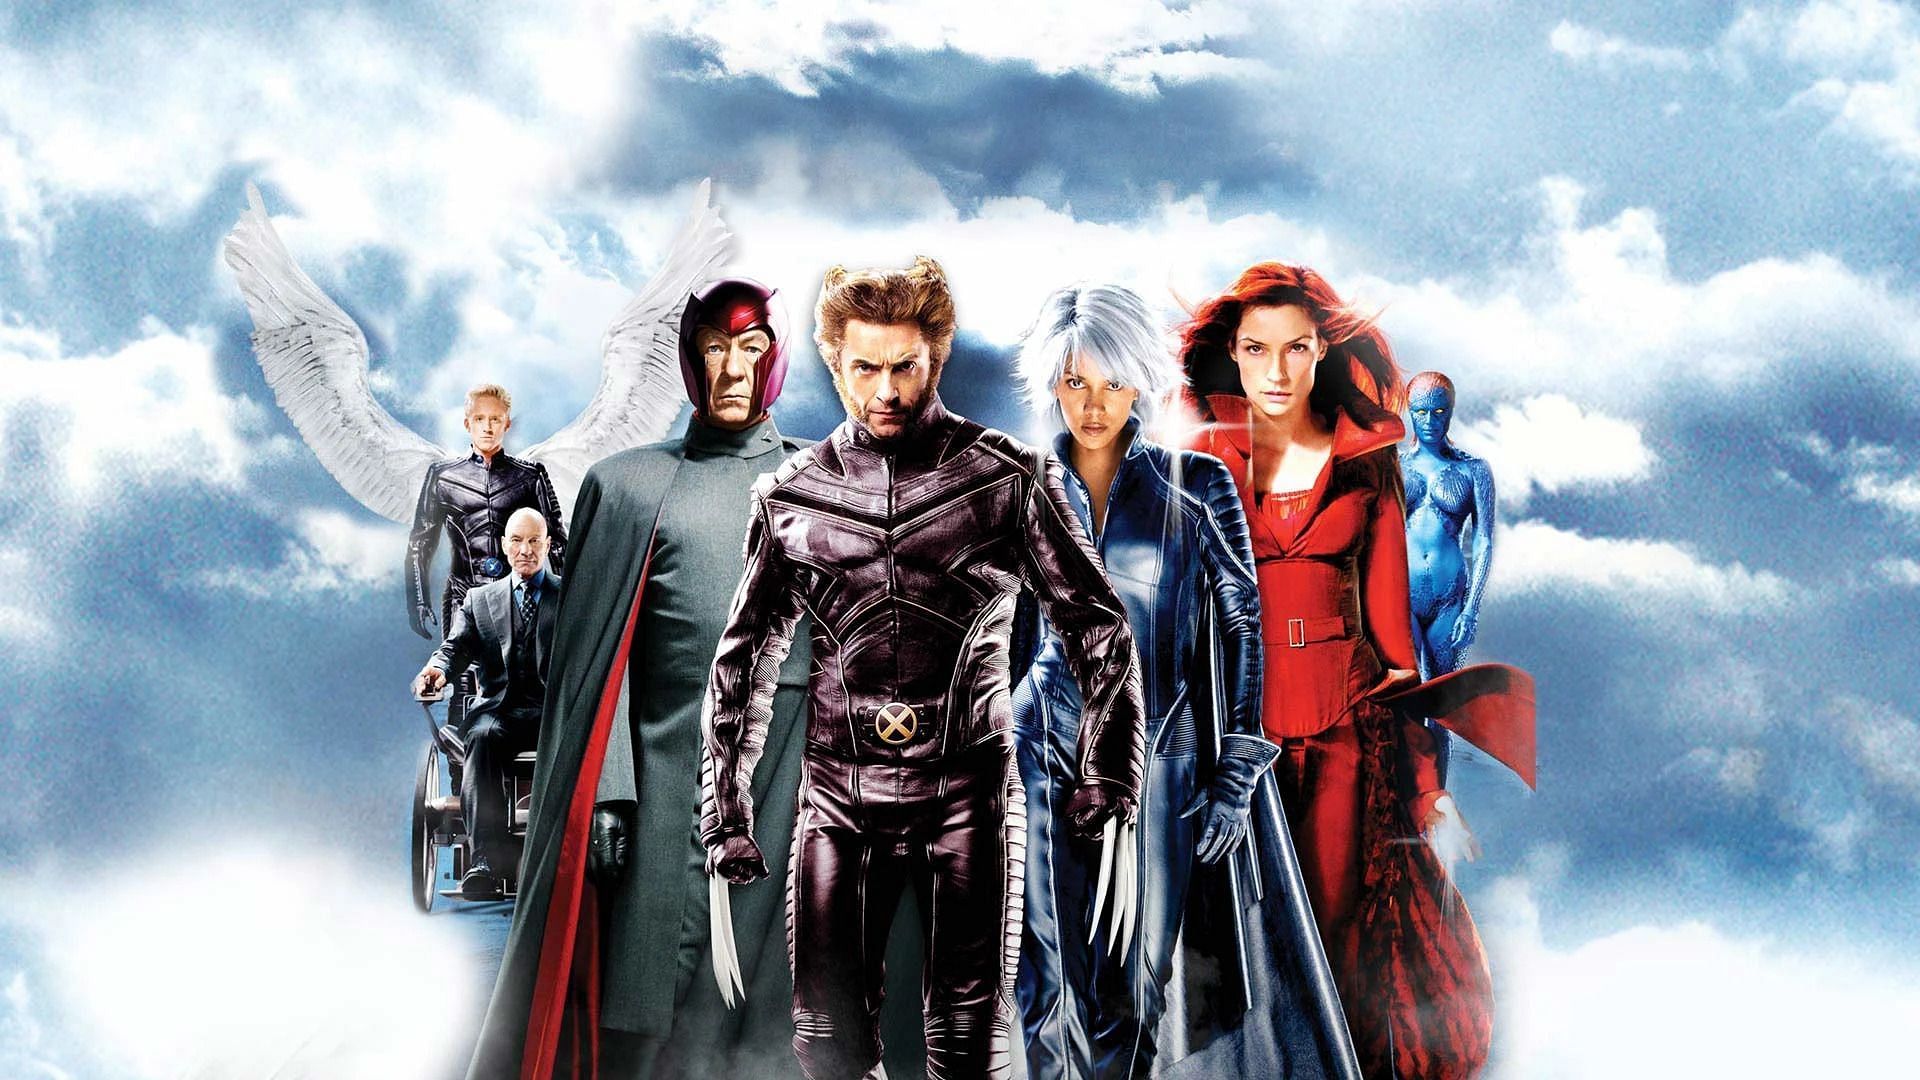 X-Men: The Last Stand (Image via Disney+)